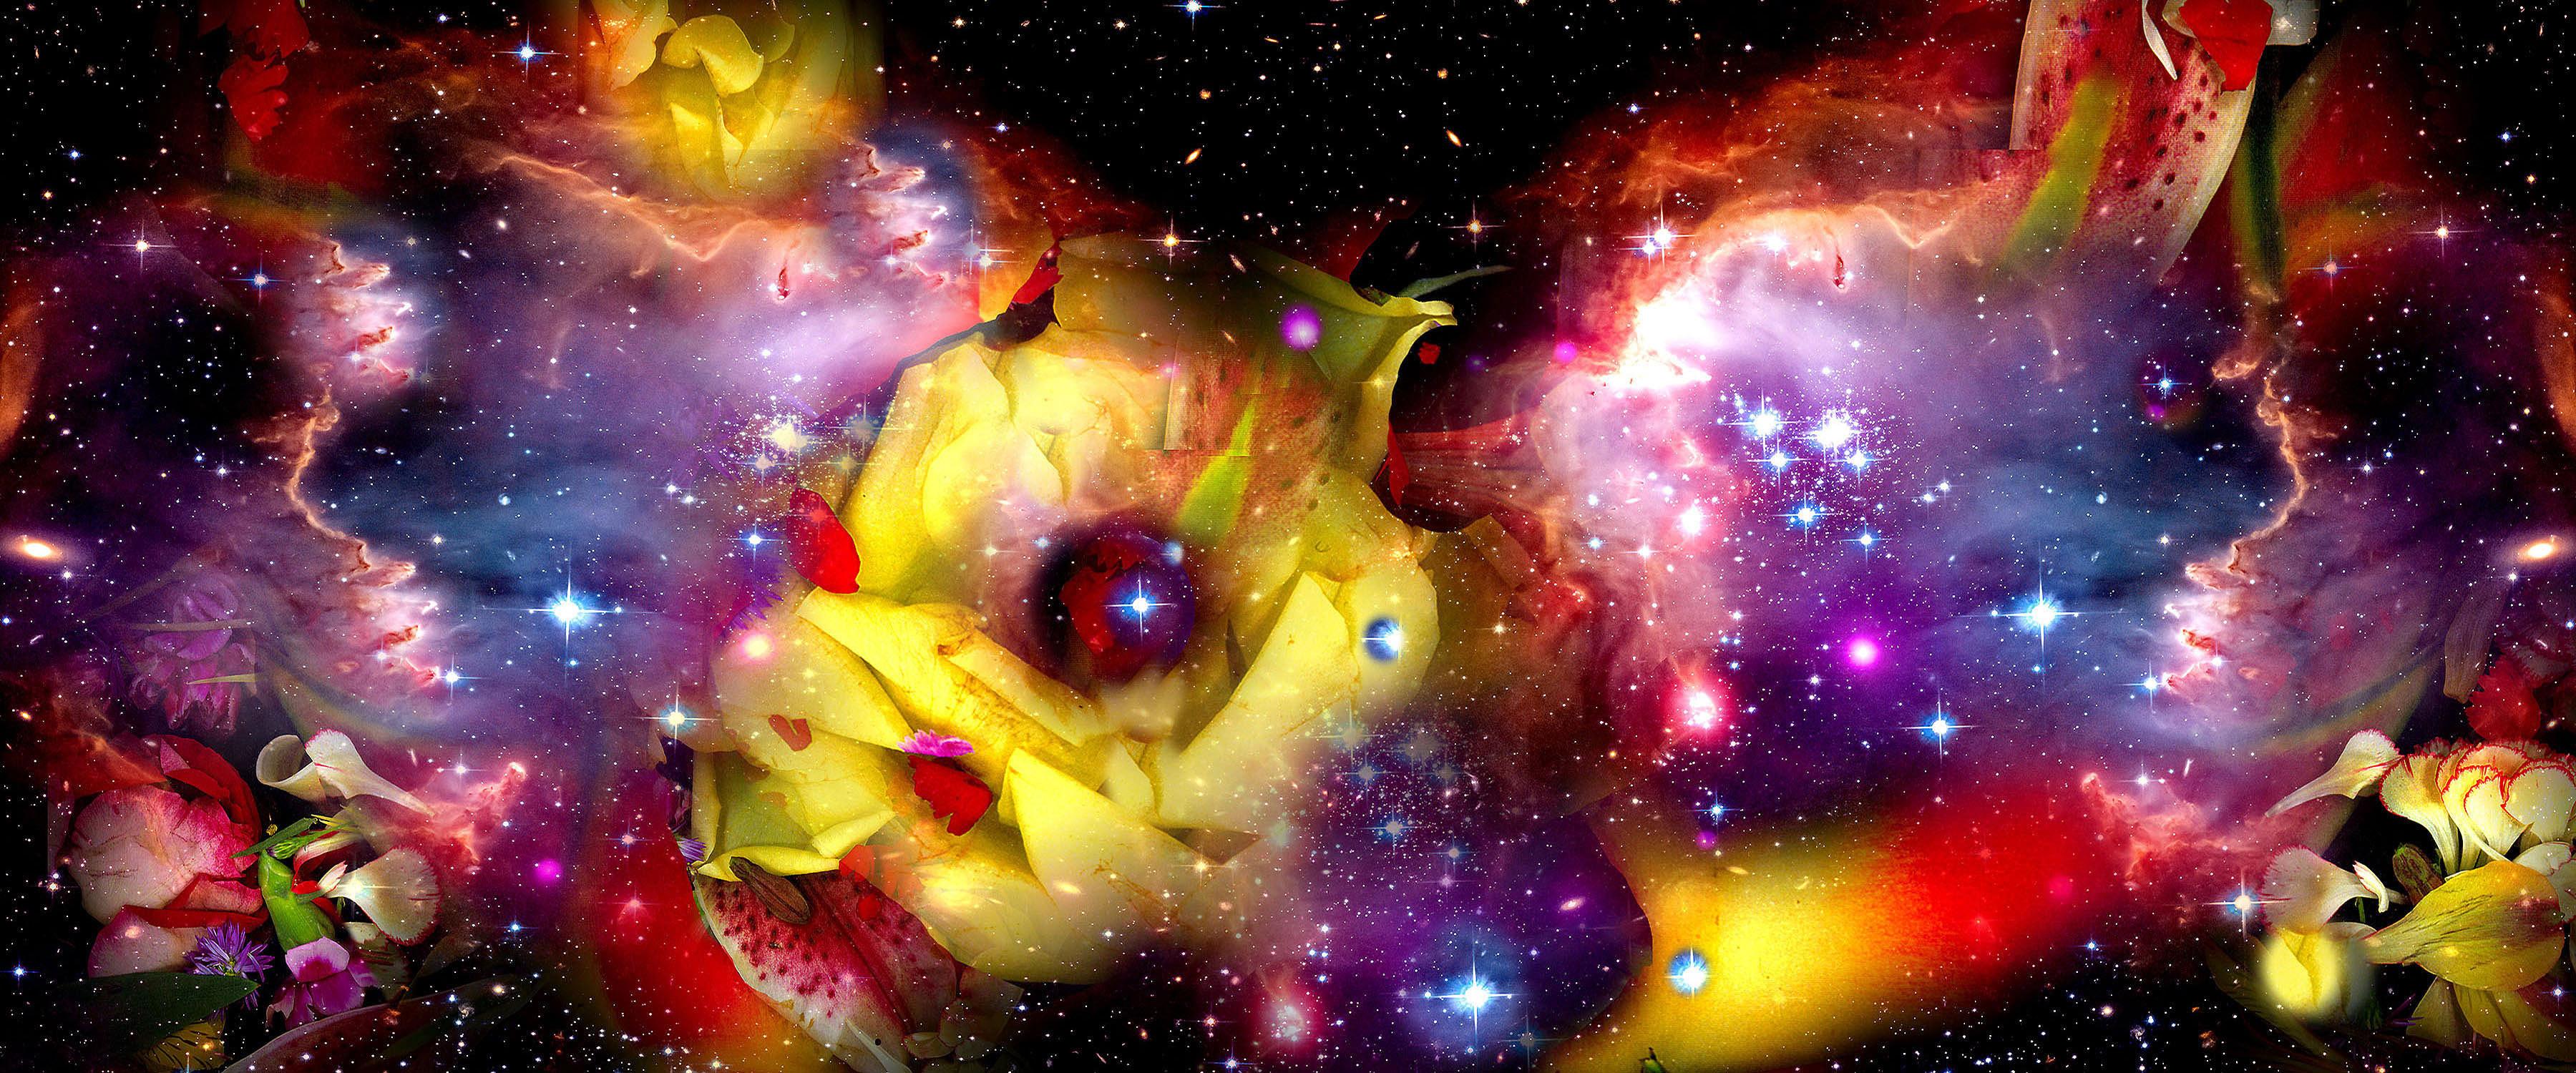 Garten- und Galaxienlandschaften: Gelbe Rose 24 Zoll "42 Zoll" helles abstraktes Himmelsbild